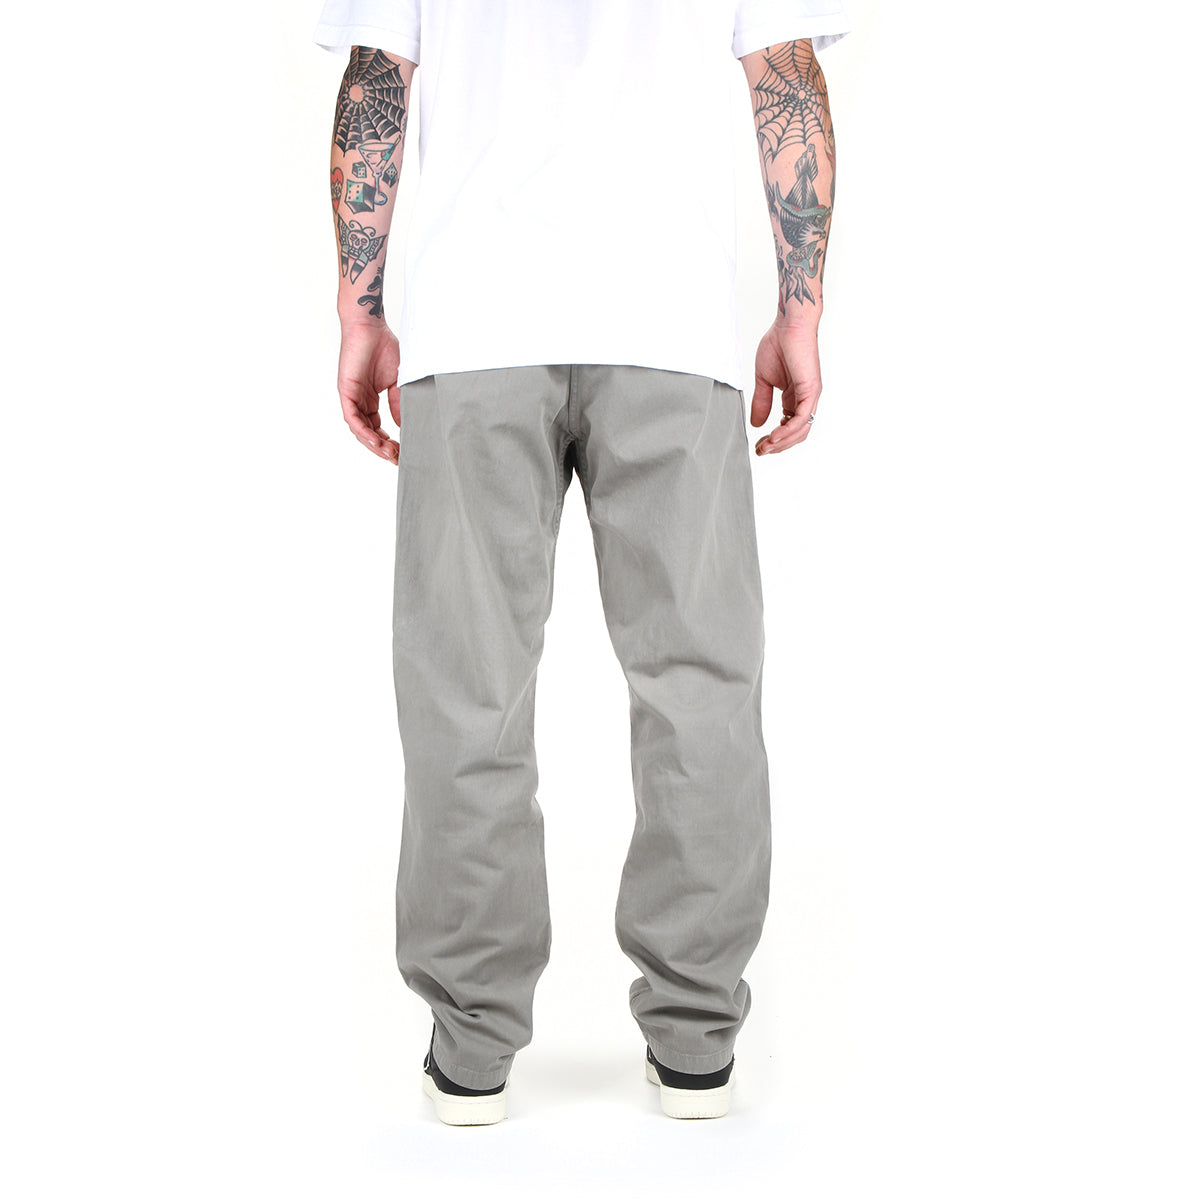 Gramicci | Gramicci Pant Style # G102-OGT Color : Dusty Khaki